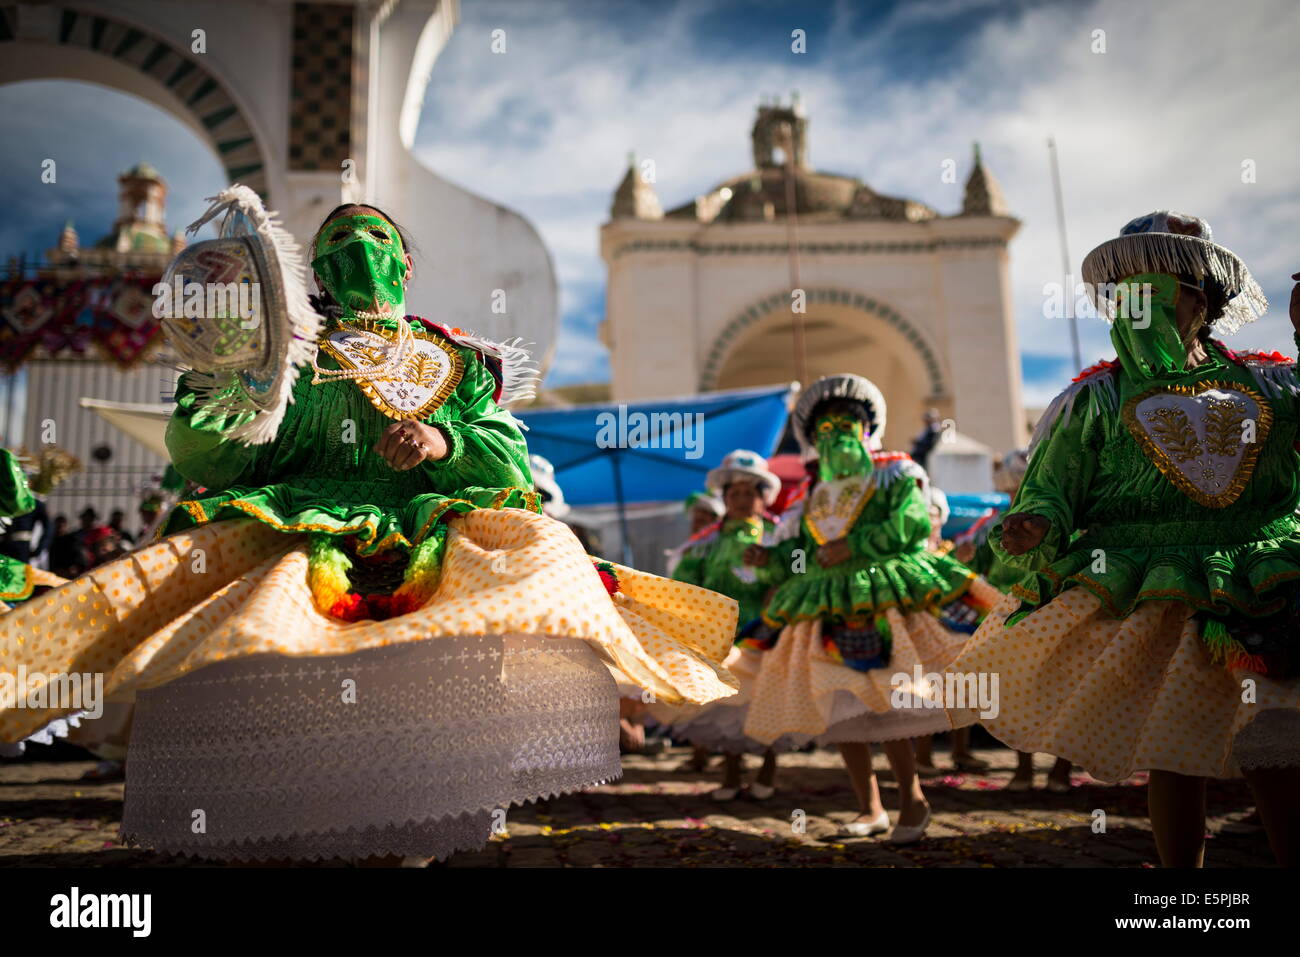 Dancers in traditional costume, Fiesta de la Virgen de la Candelaria, Copacabana, Lake Titicaca, Bolivia, South America Stock Photo